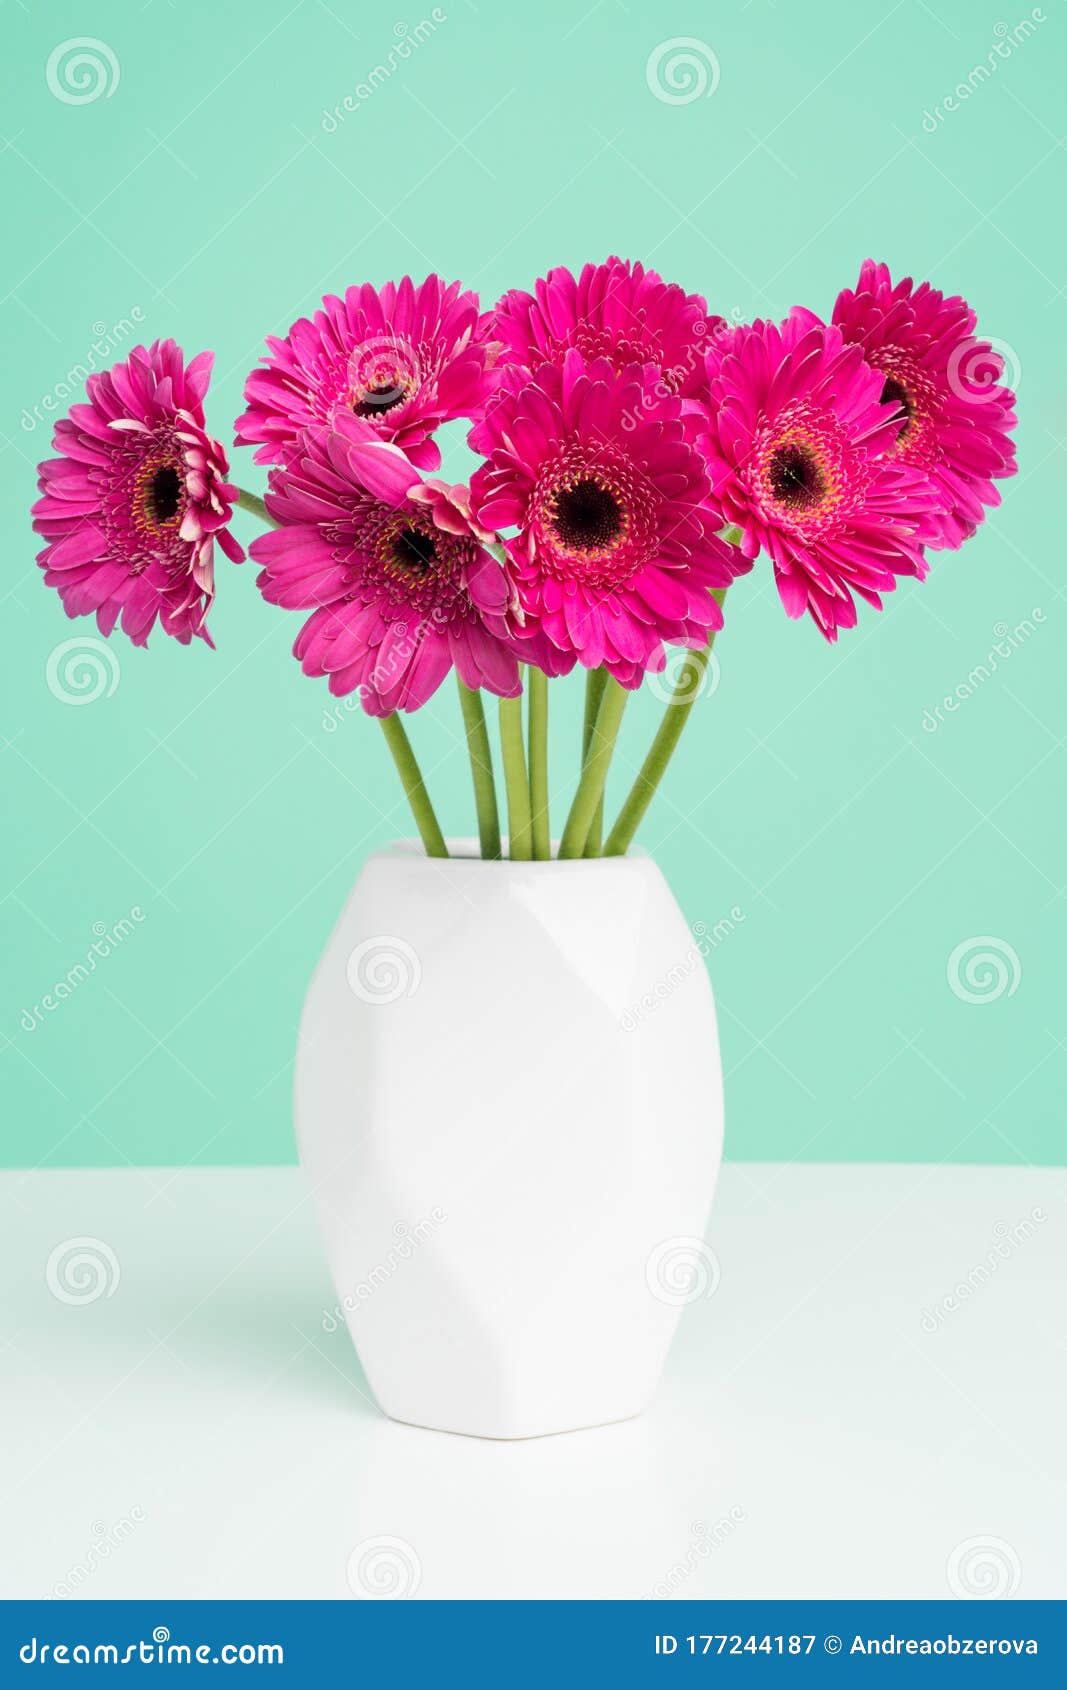 beautiful dark pink gerbera daisies in a plain white vase against pastel green background. minimalist floral background.